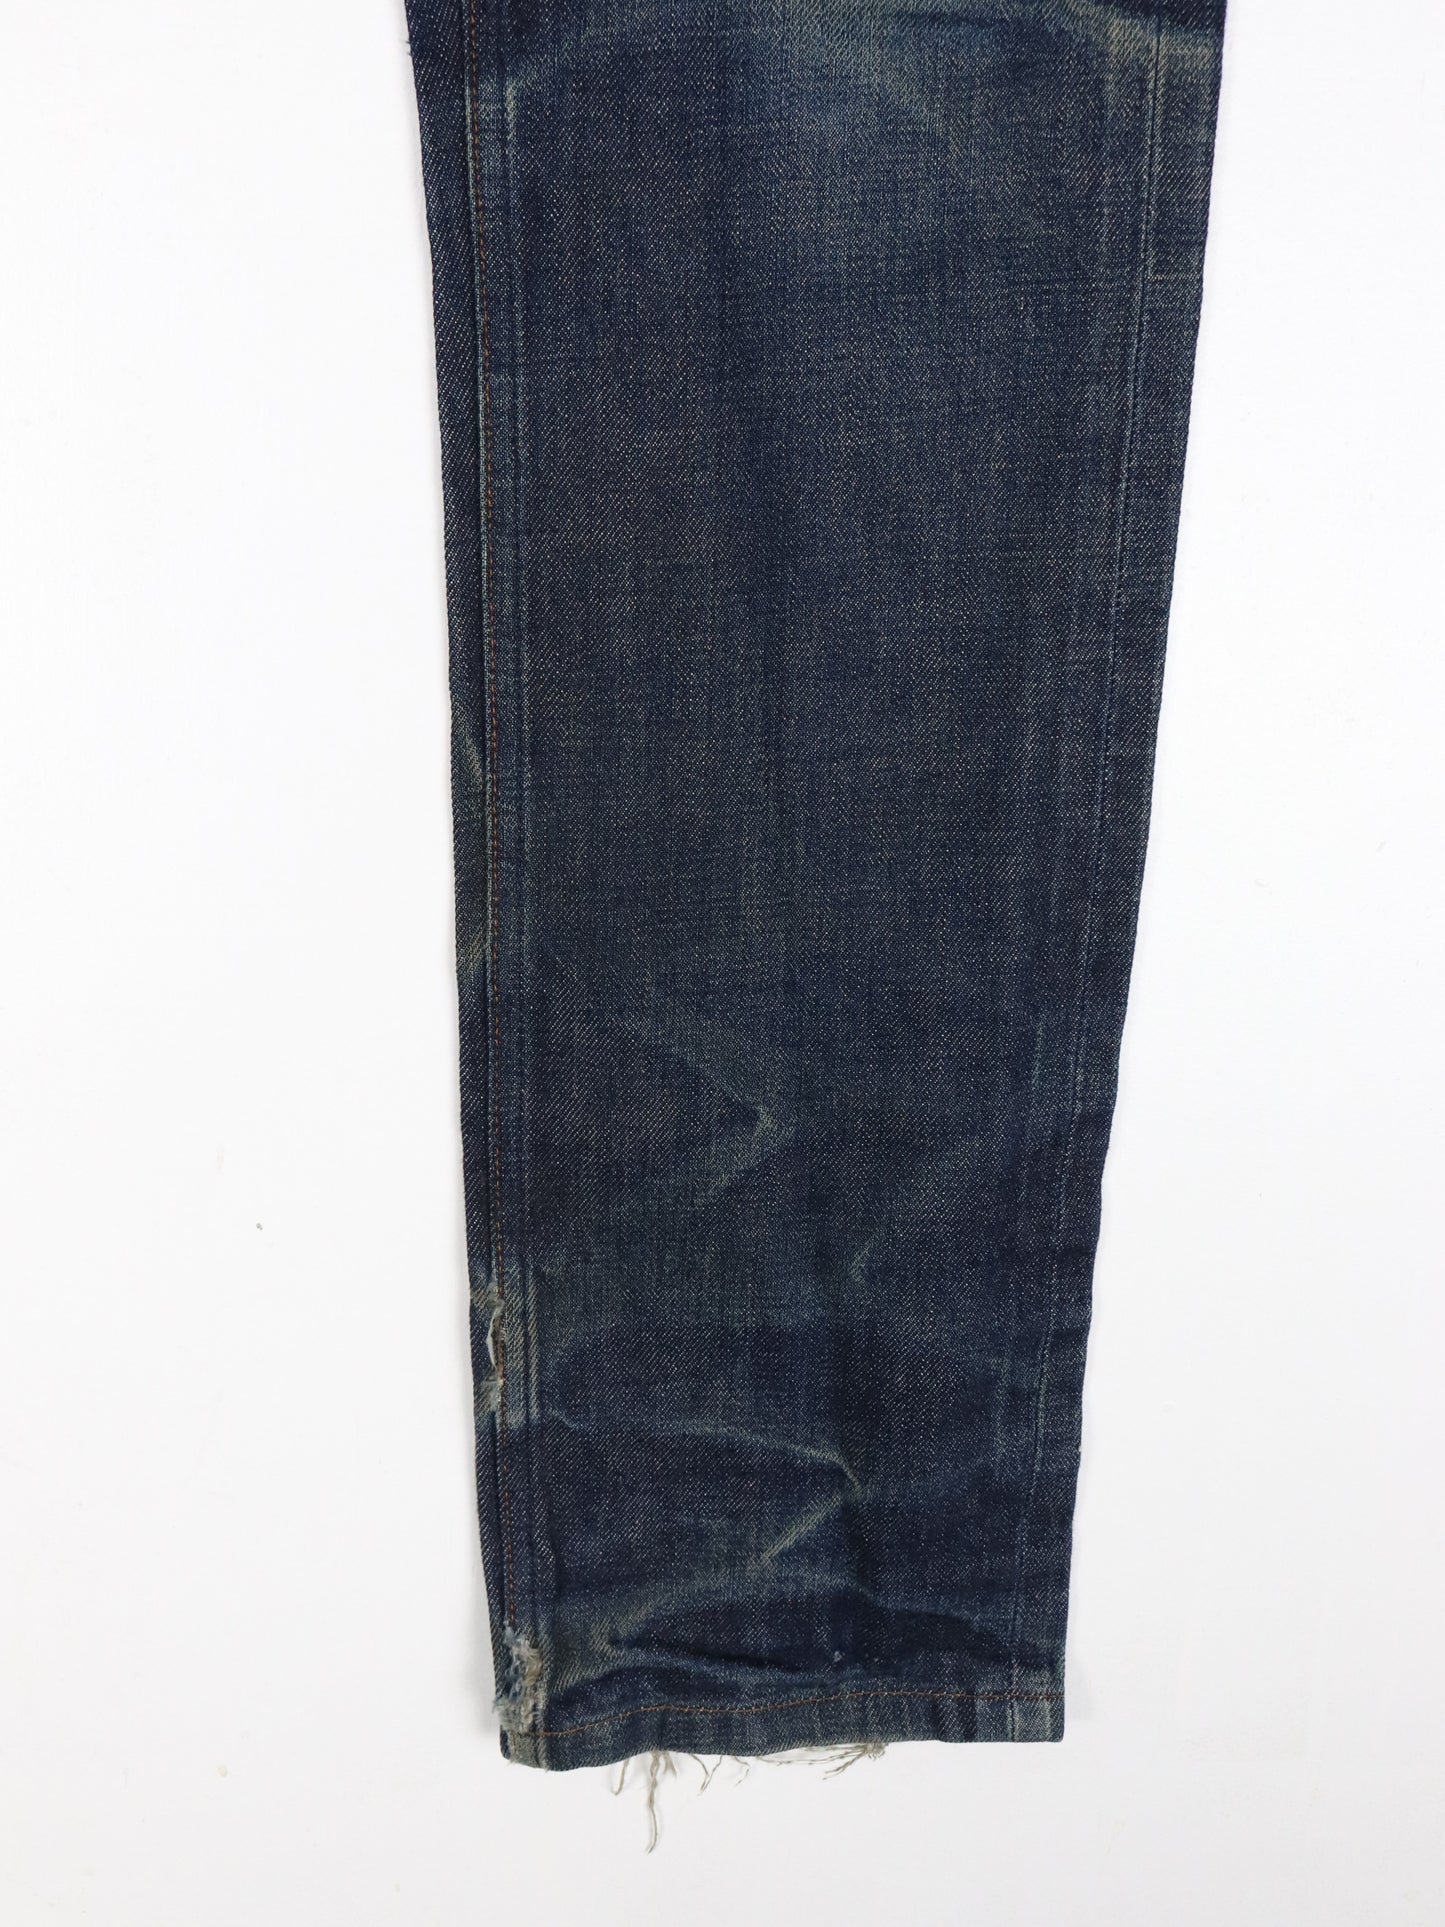 A.P.C. Pants Fits Mens 31 x 34 Petit Standard Denim Jeans Selvedge Slim Fit